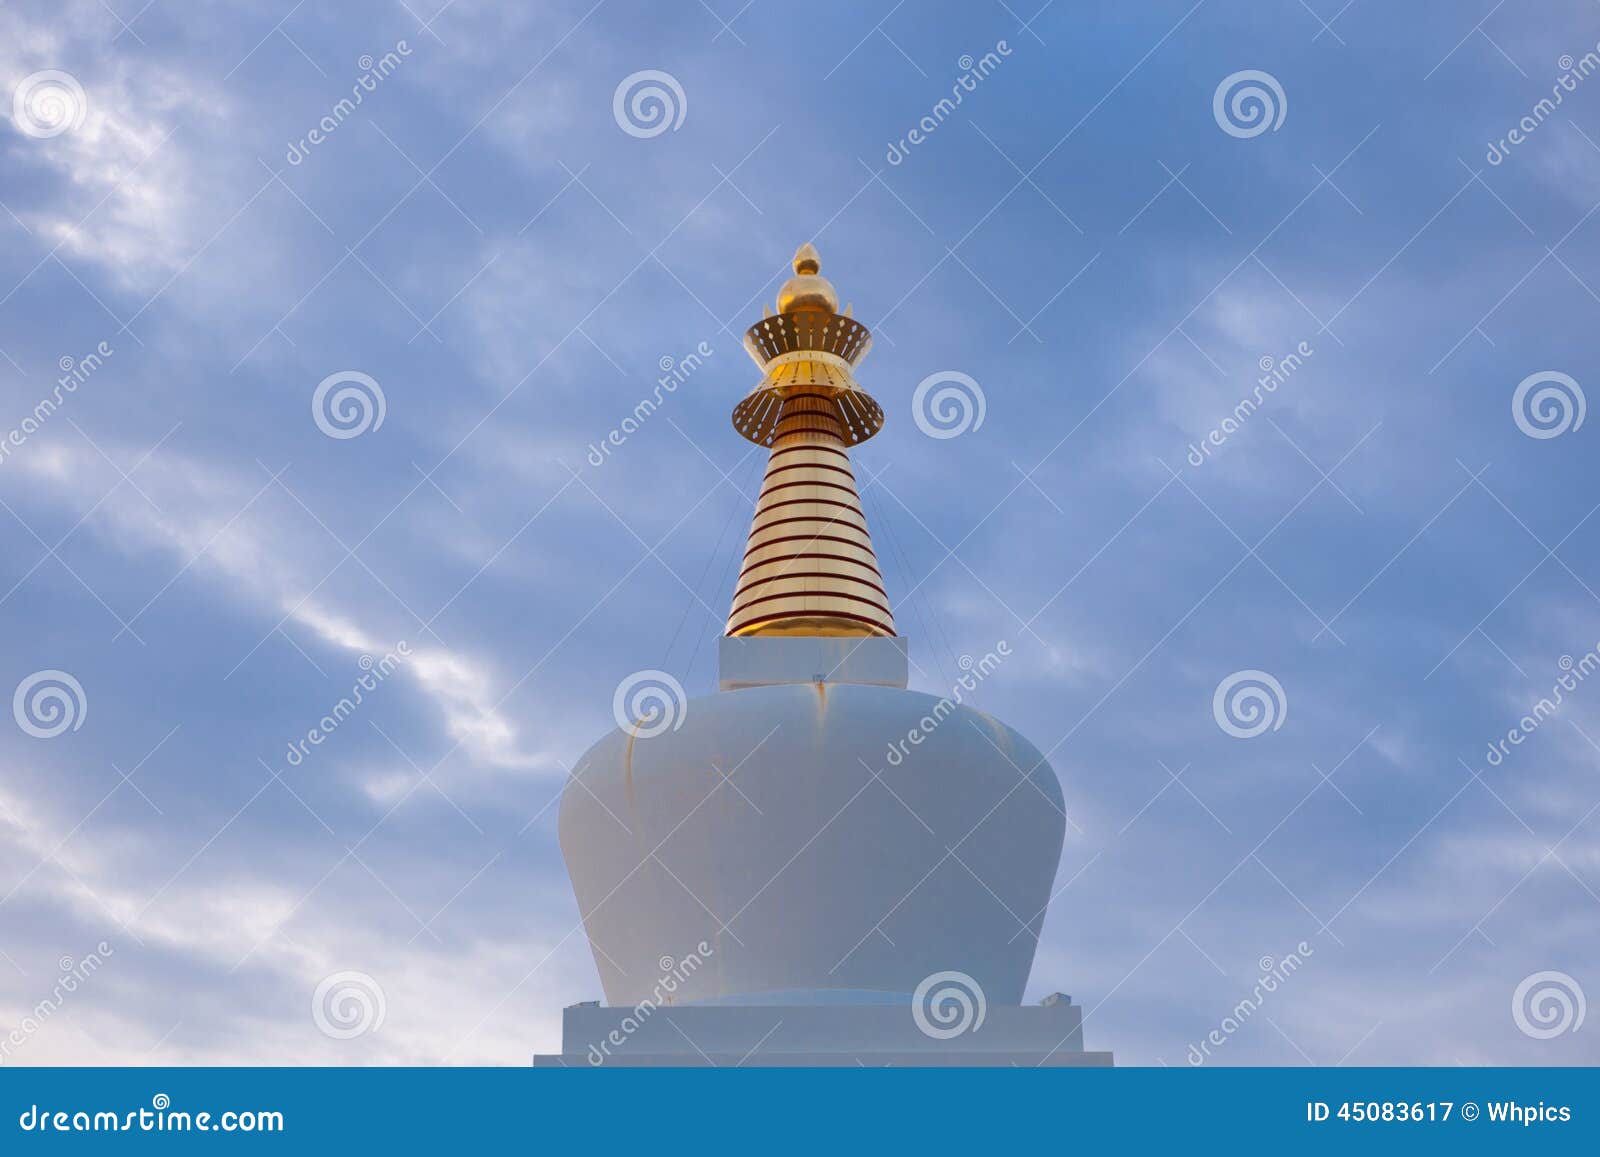 benalmadena estupa tower